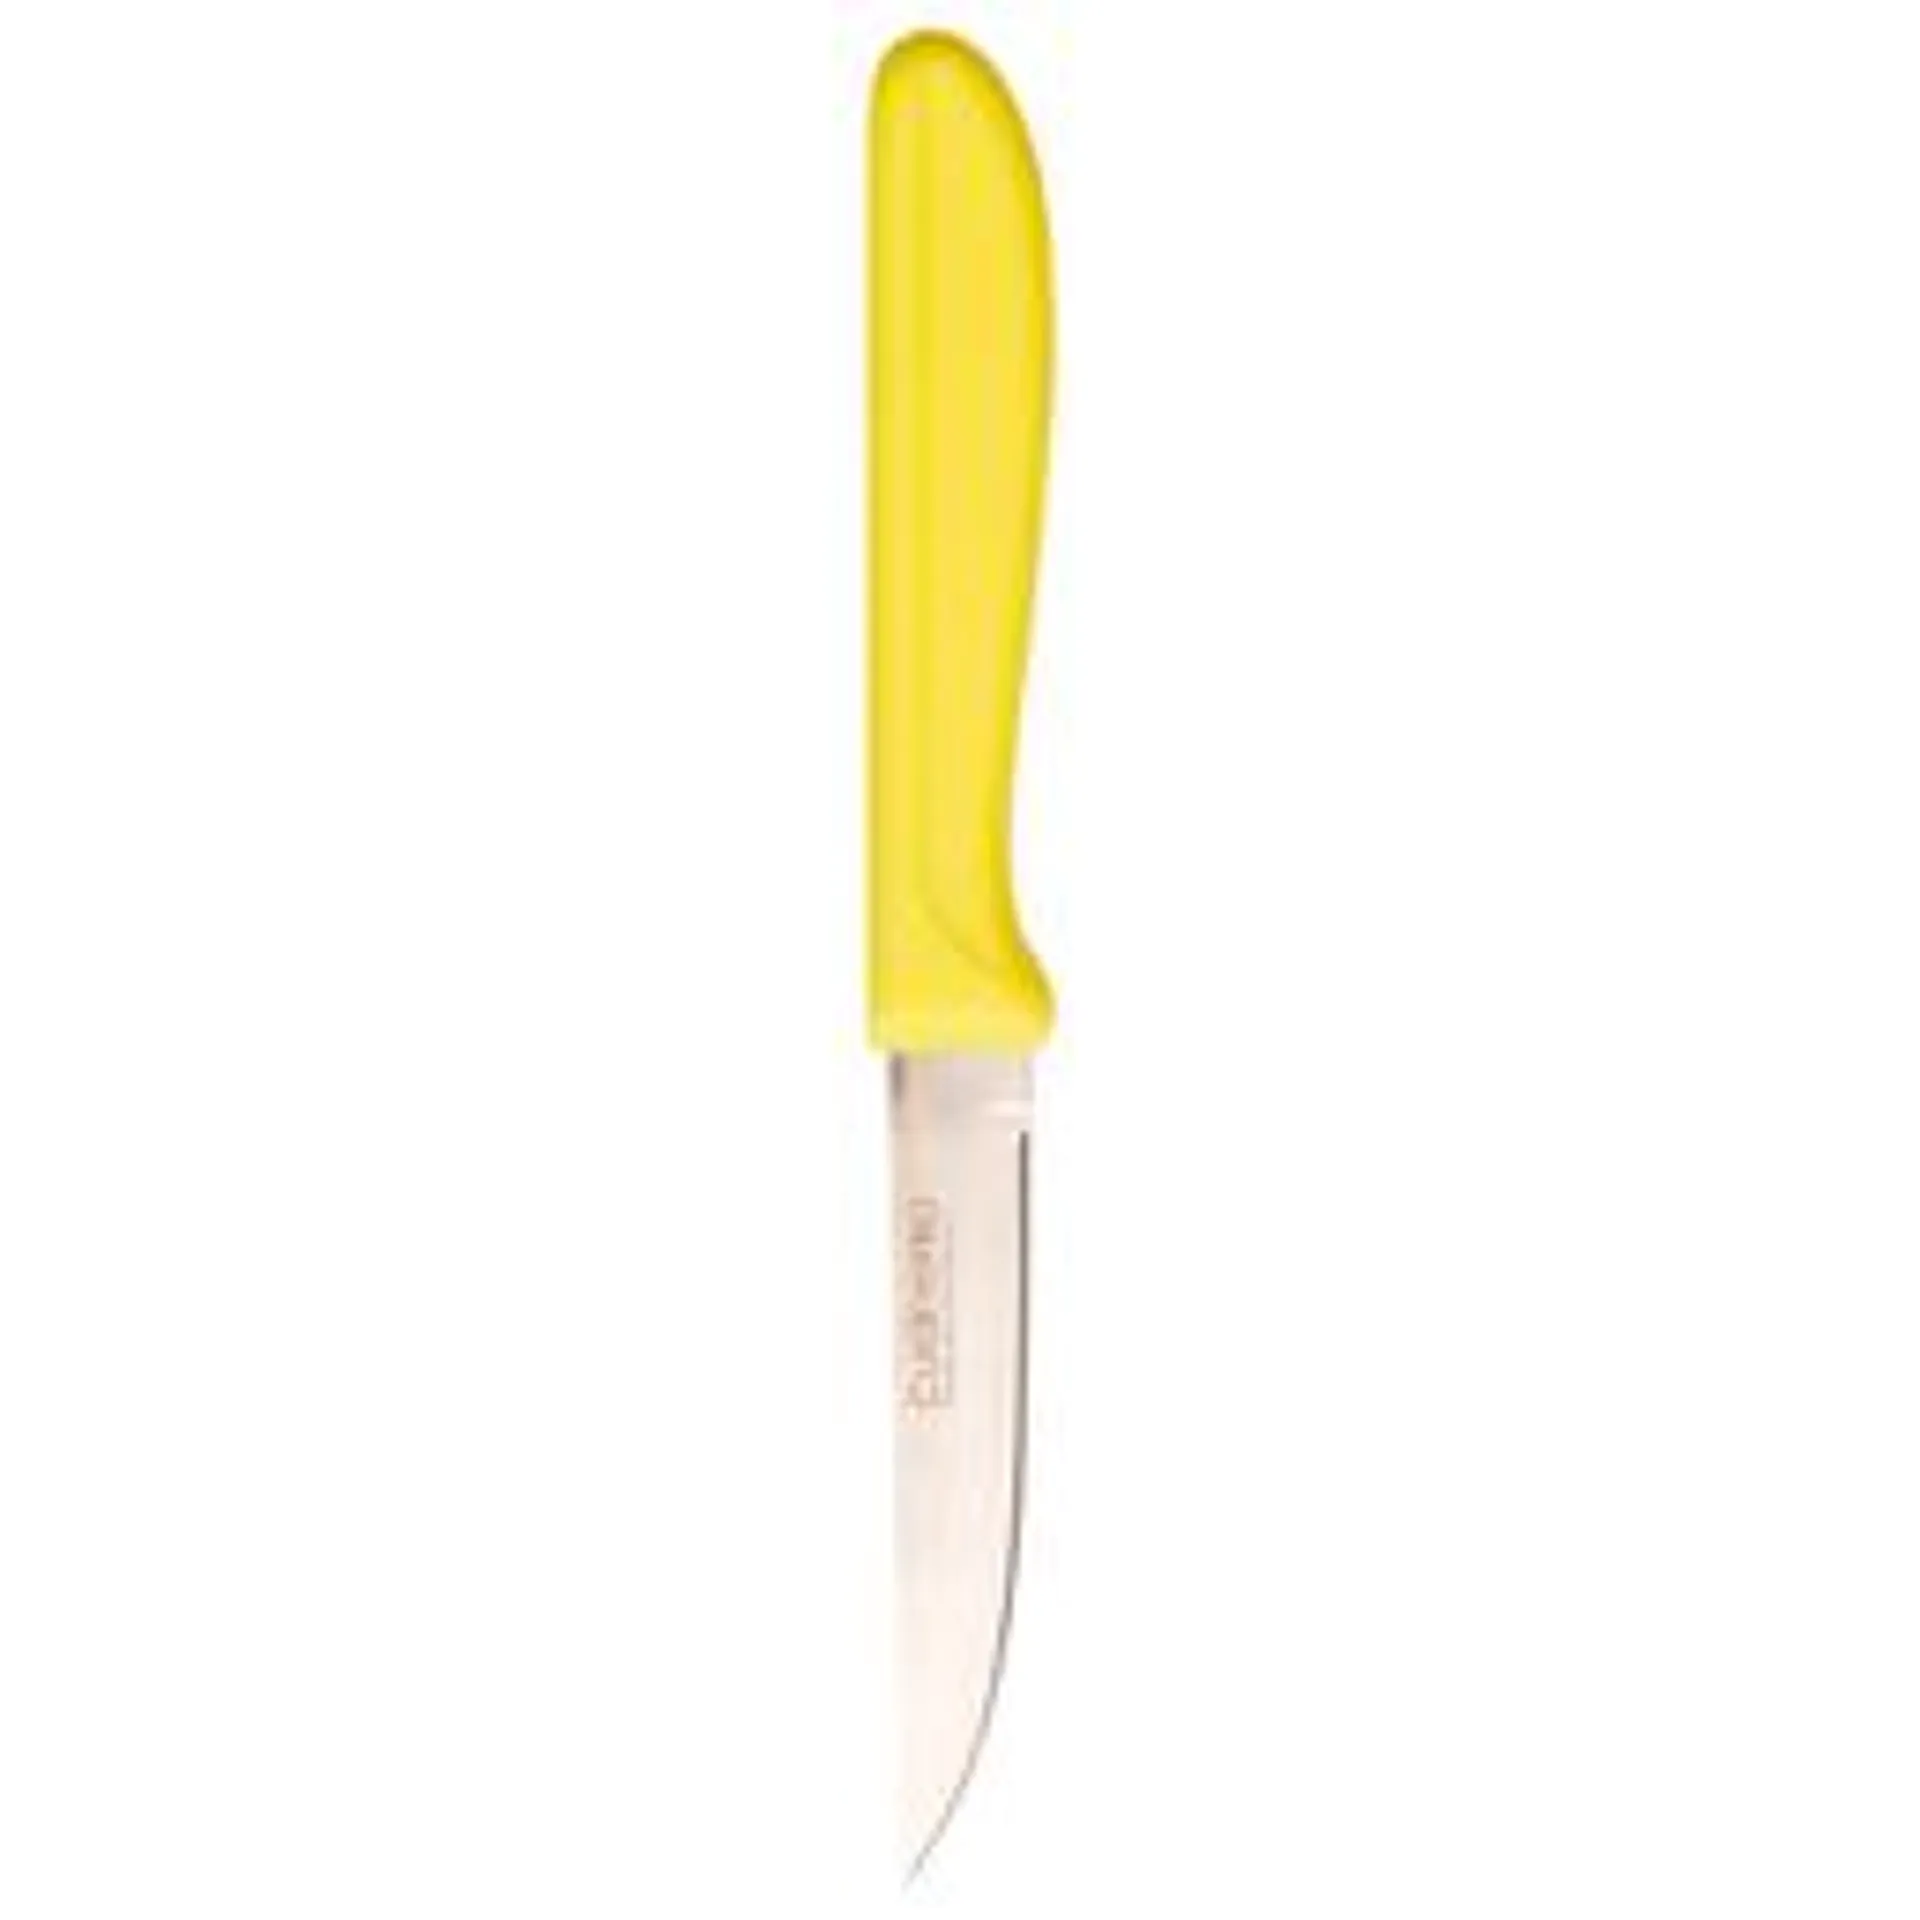 Cuisine::pro Classic Serrated Paring Knife, Yellow, 9cm